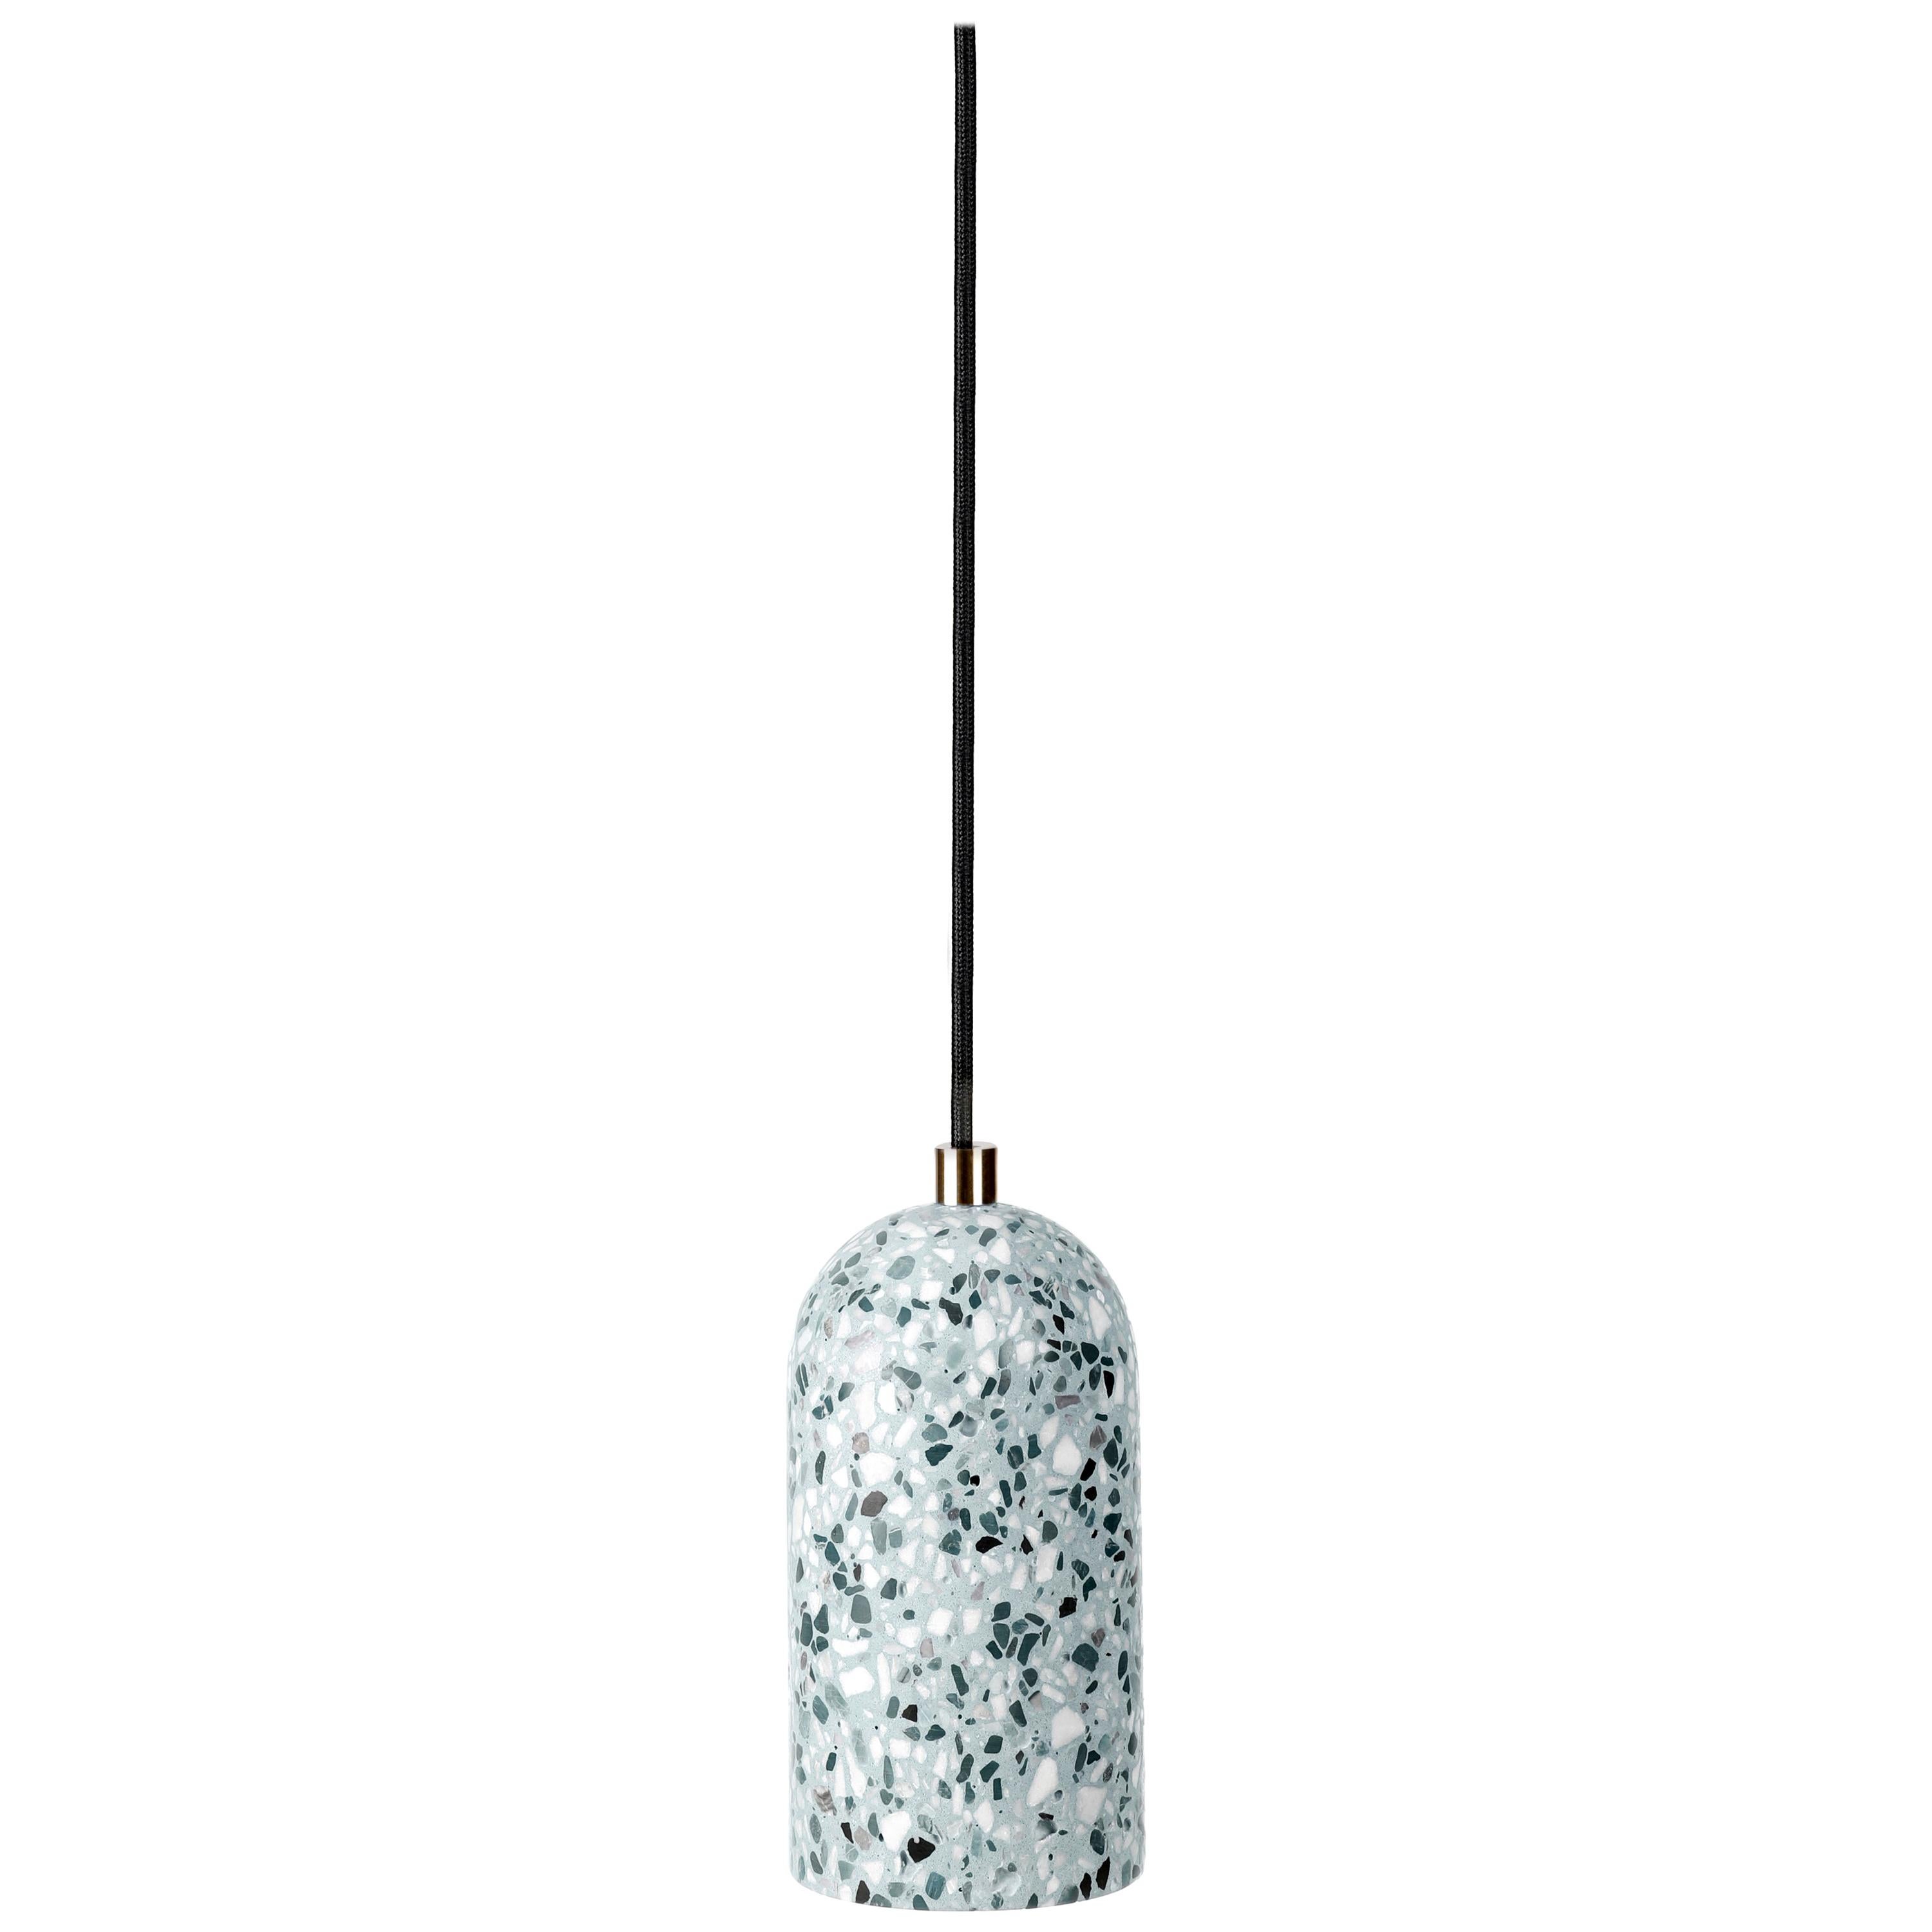 'U' Sky Blue Terrazzo Pendant Lamp by Bentu Design